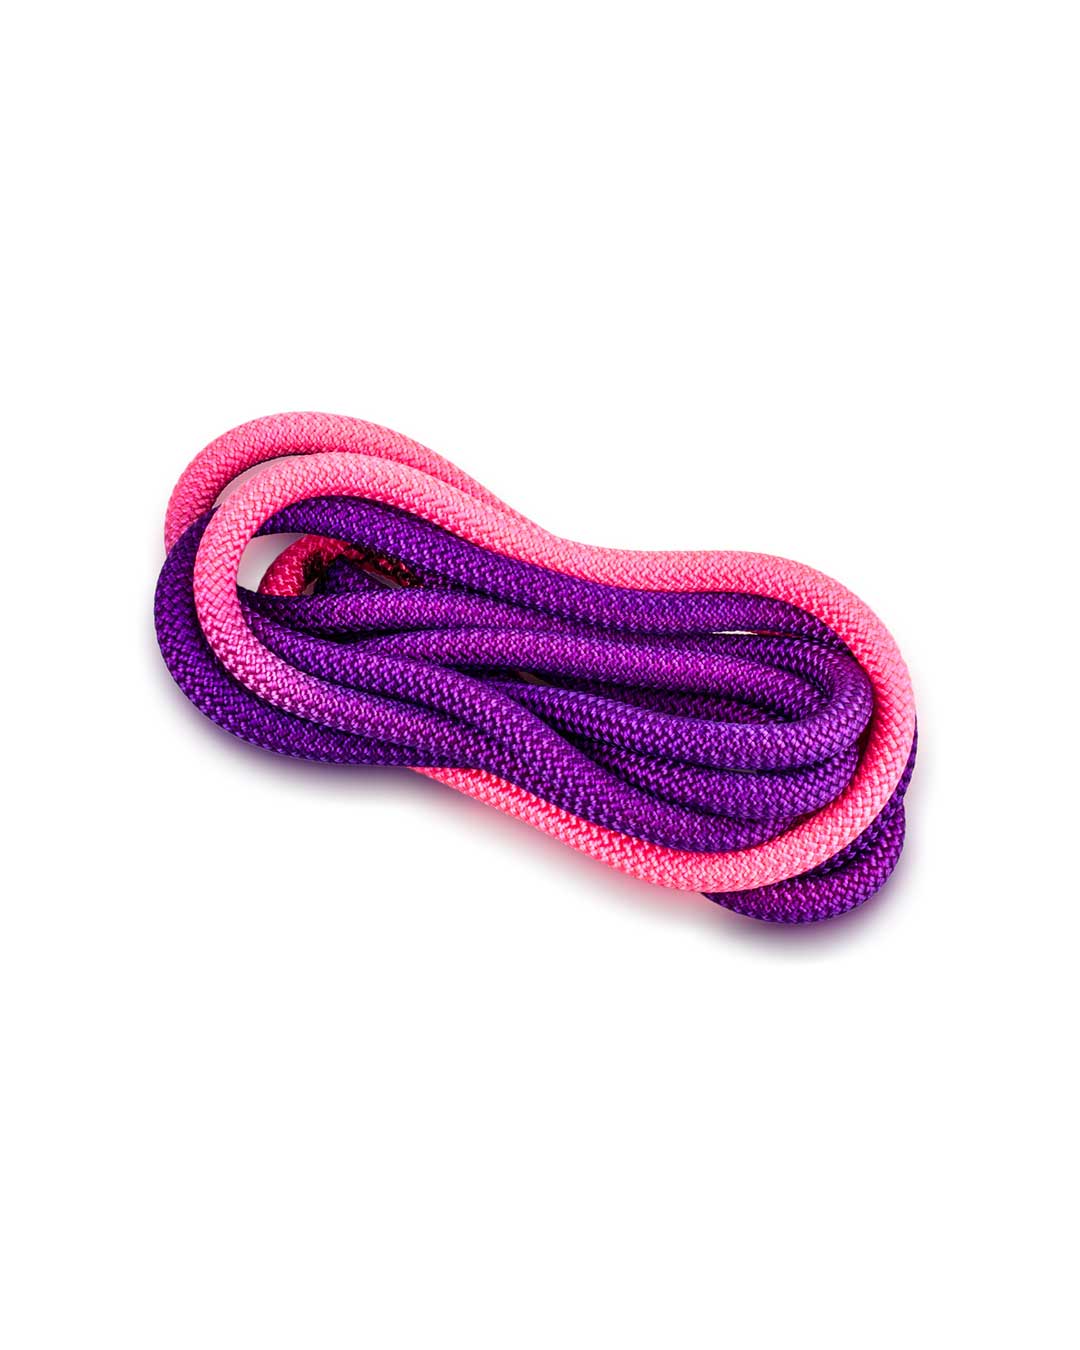 Cuerda de gimnasia rítmica VENTURELLI (Certificada FIG) morado rosado - 3 m 